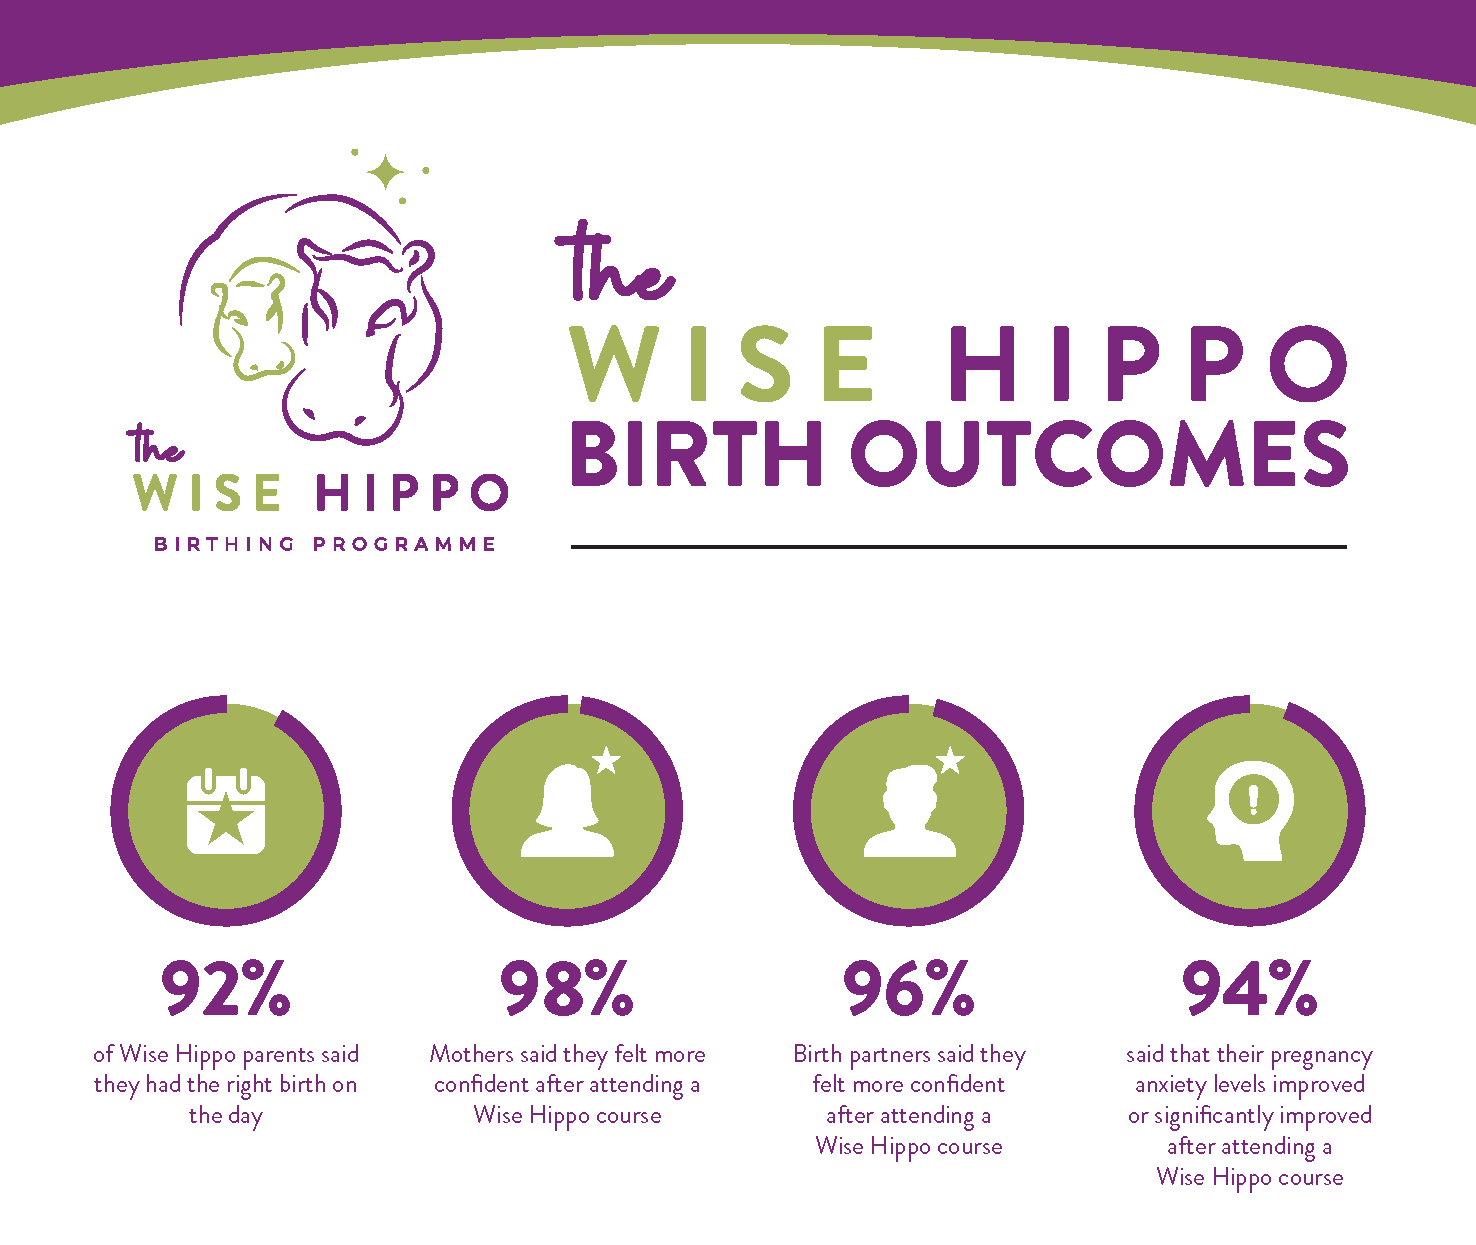 The Wise Hippo Birth Outcomes